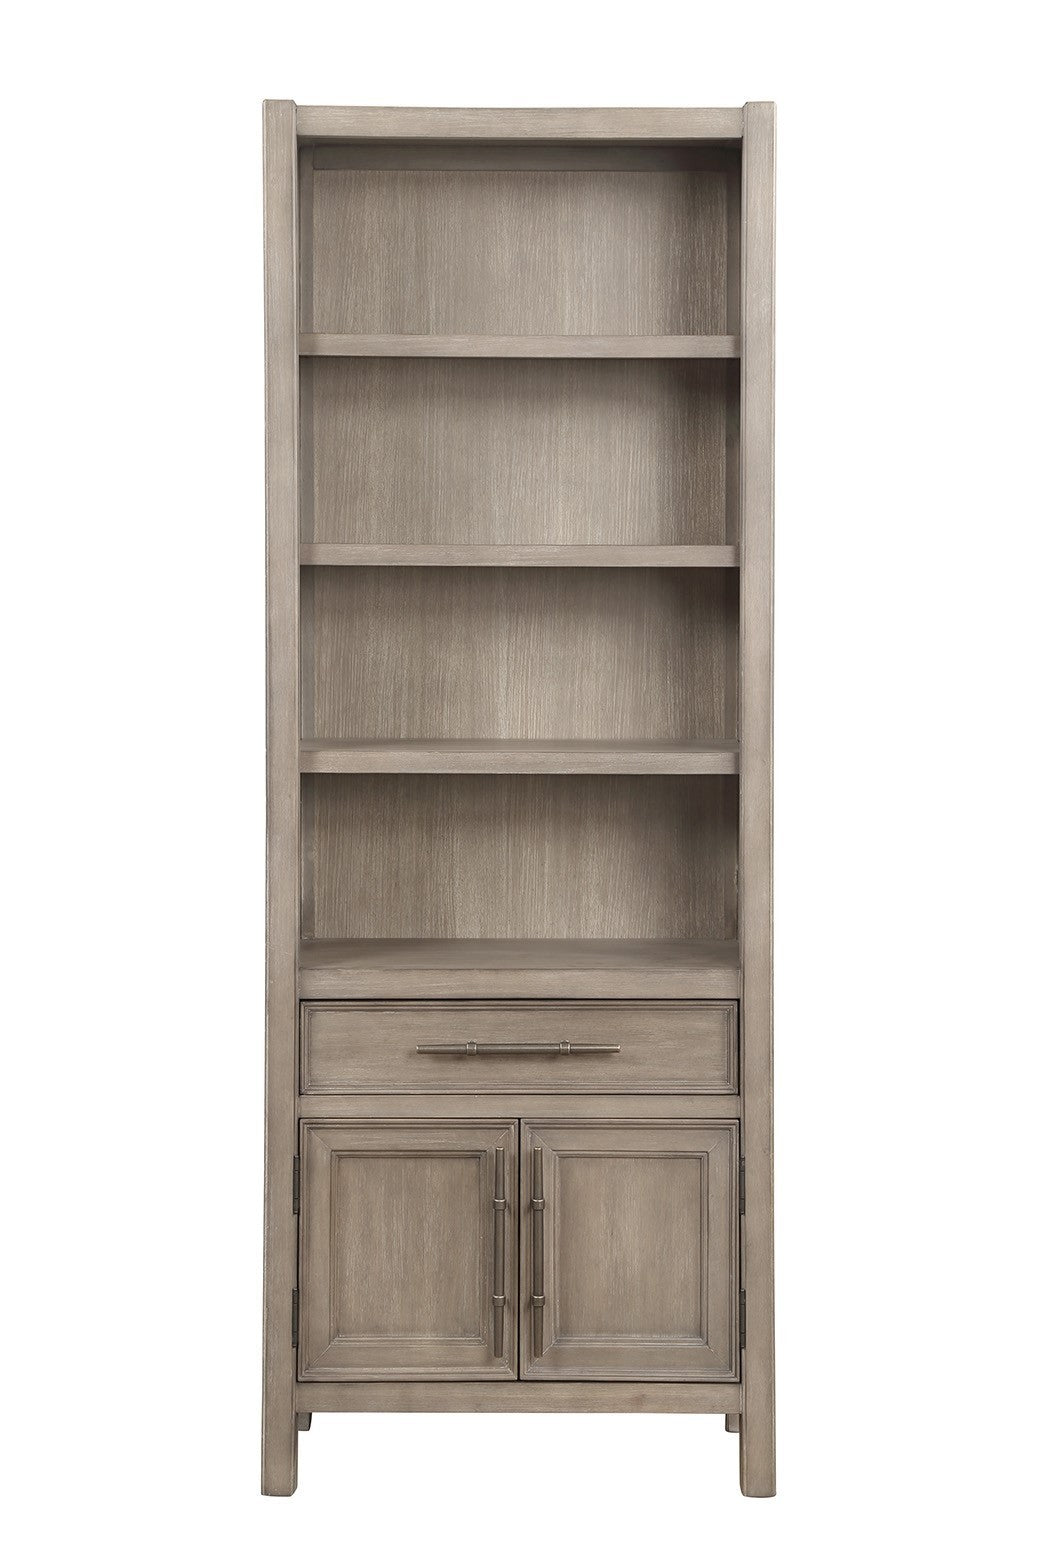 TM-HOME-Cypress-Lane-Bookcase-Pier-Cabinet,-White-Oak-Finish-Bookcases-&-Standing-Shelves